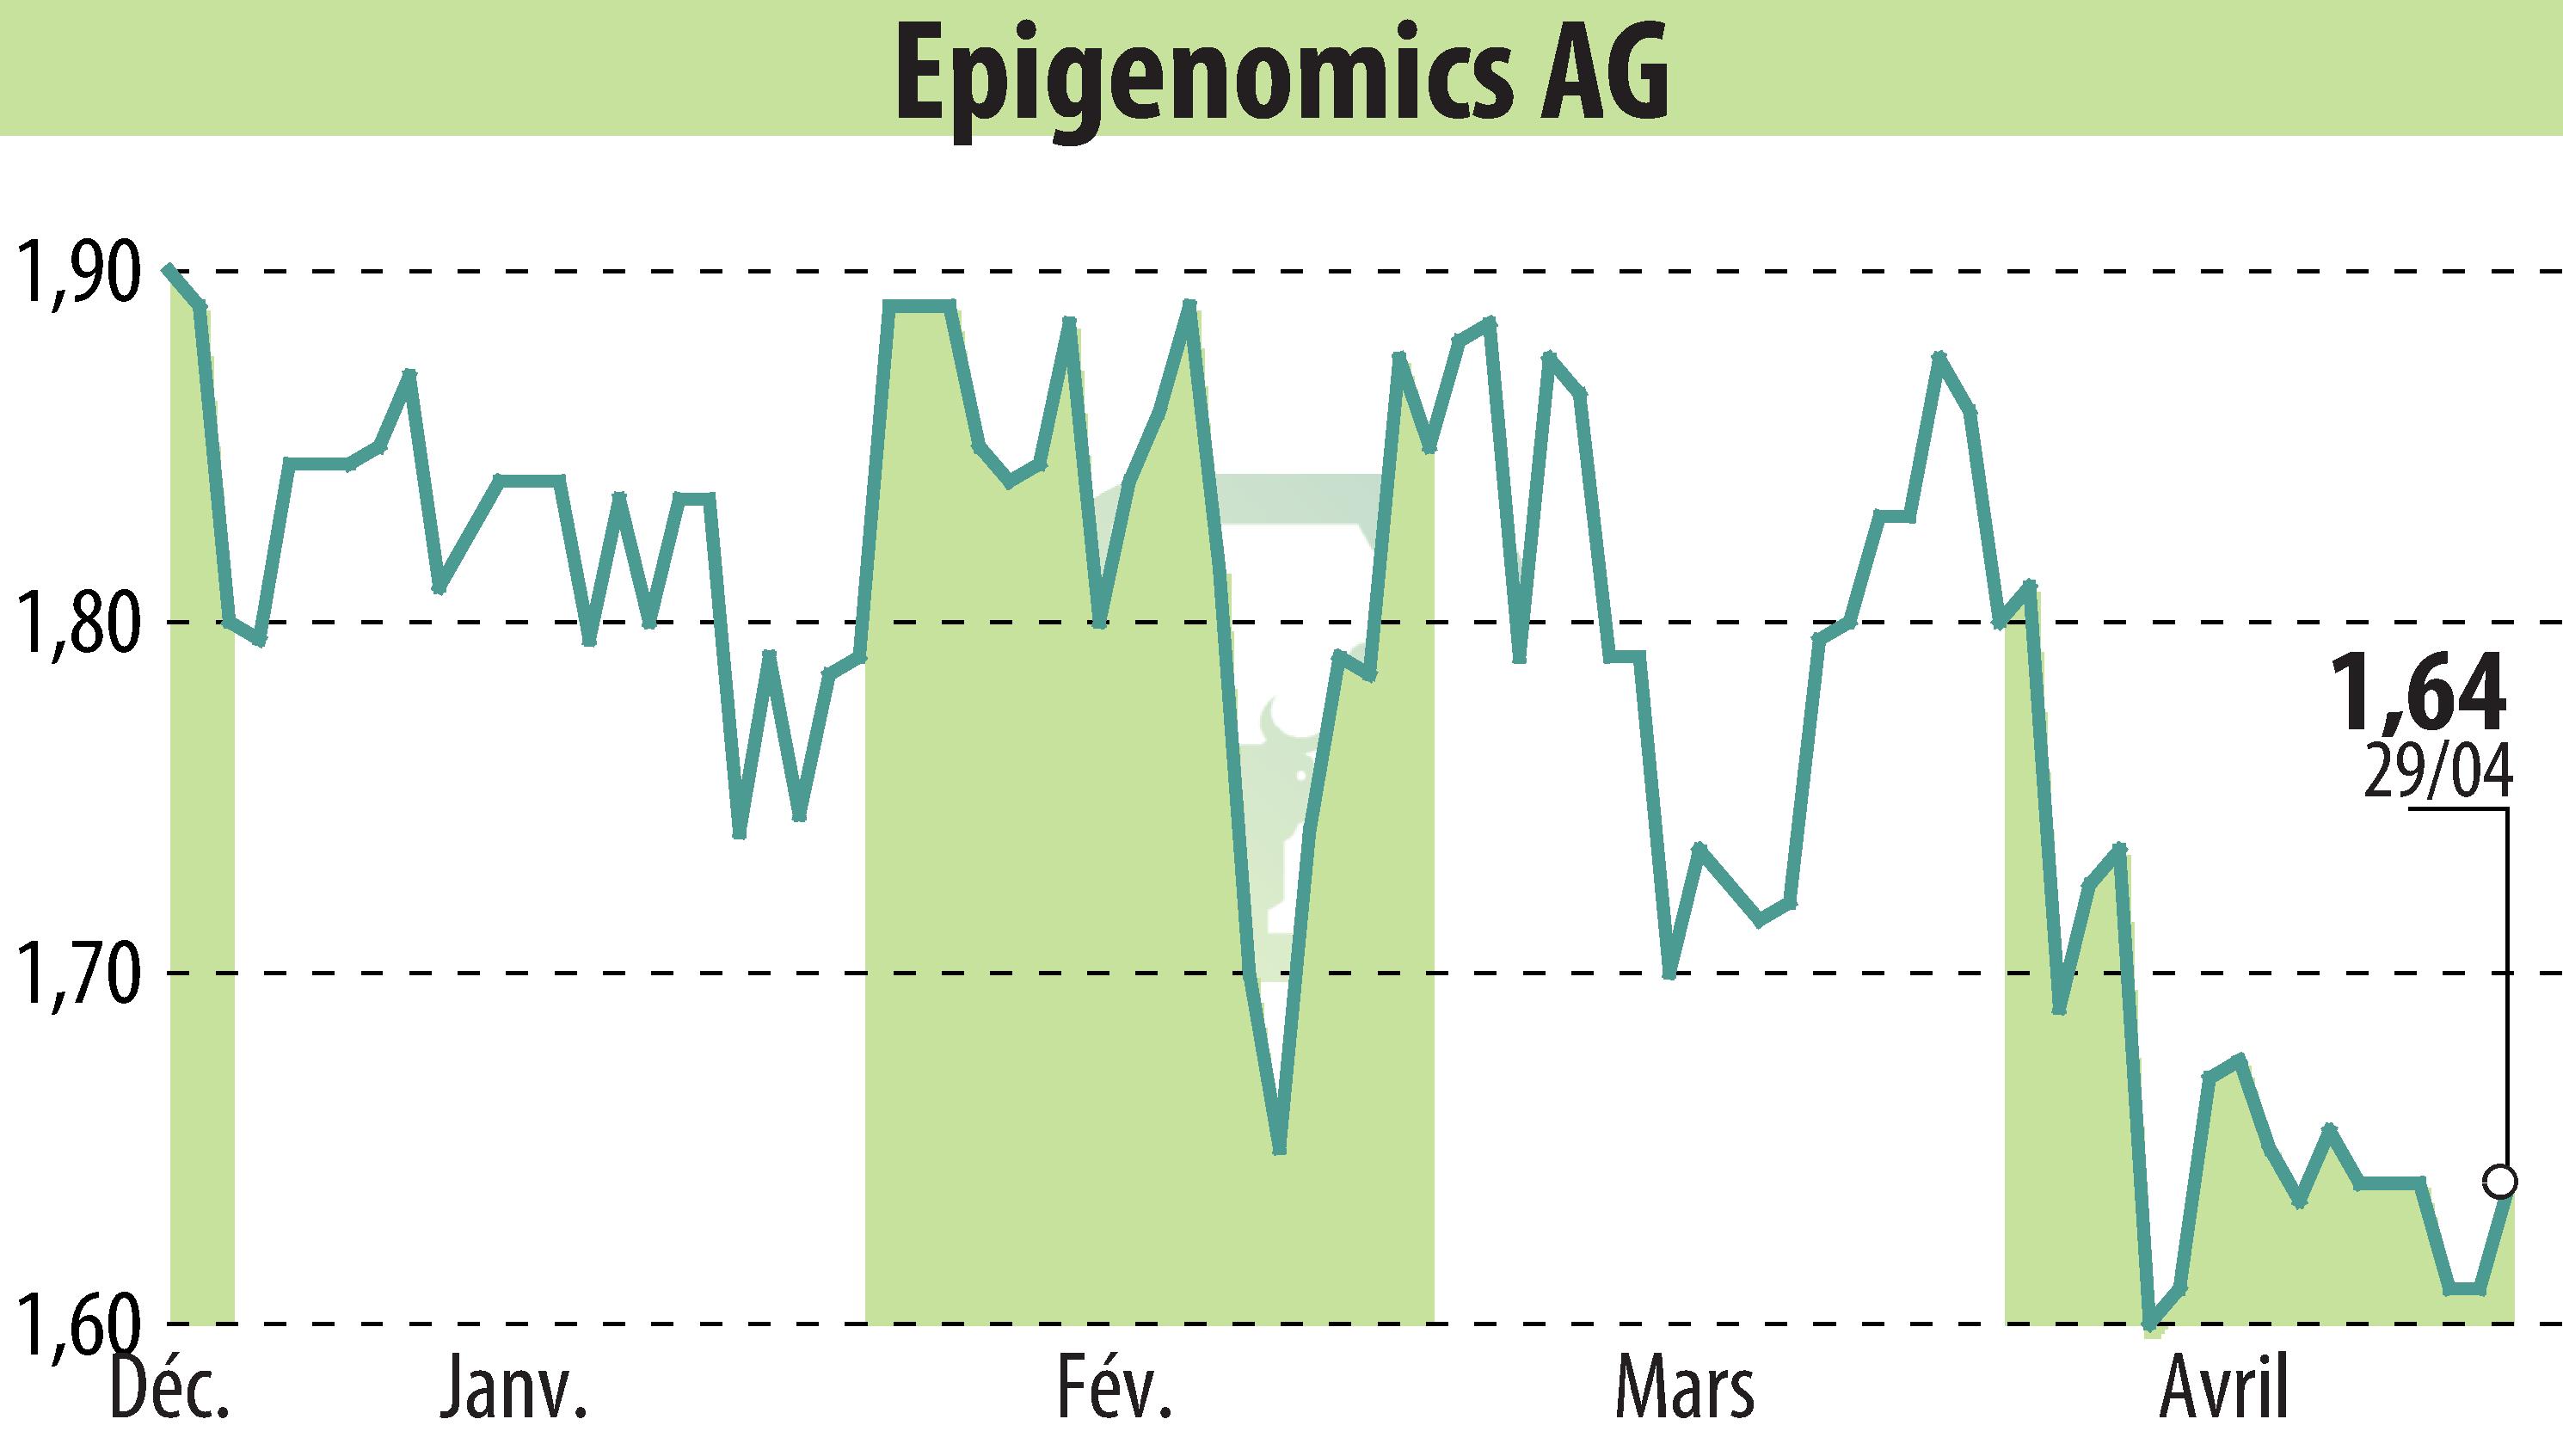 Stock price chart of Epigenomics AG (EBR:ECX) showing fluctuations.